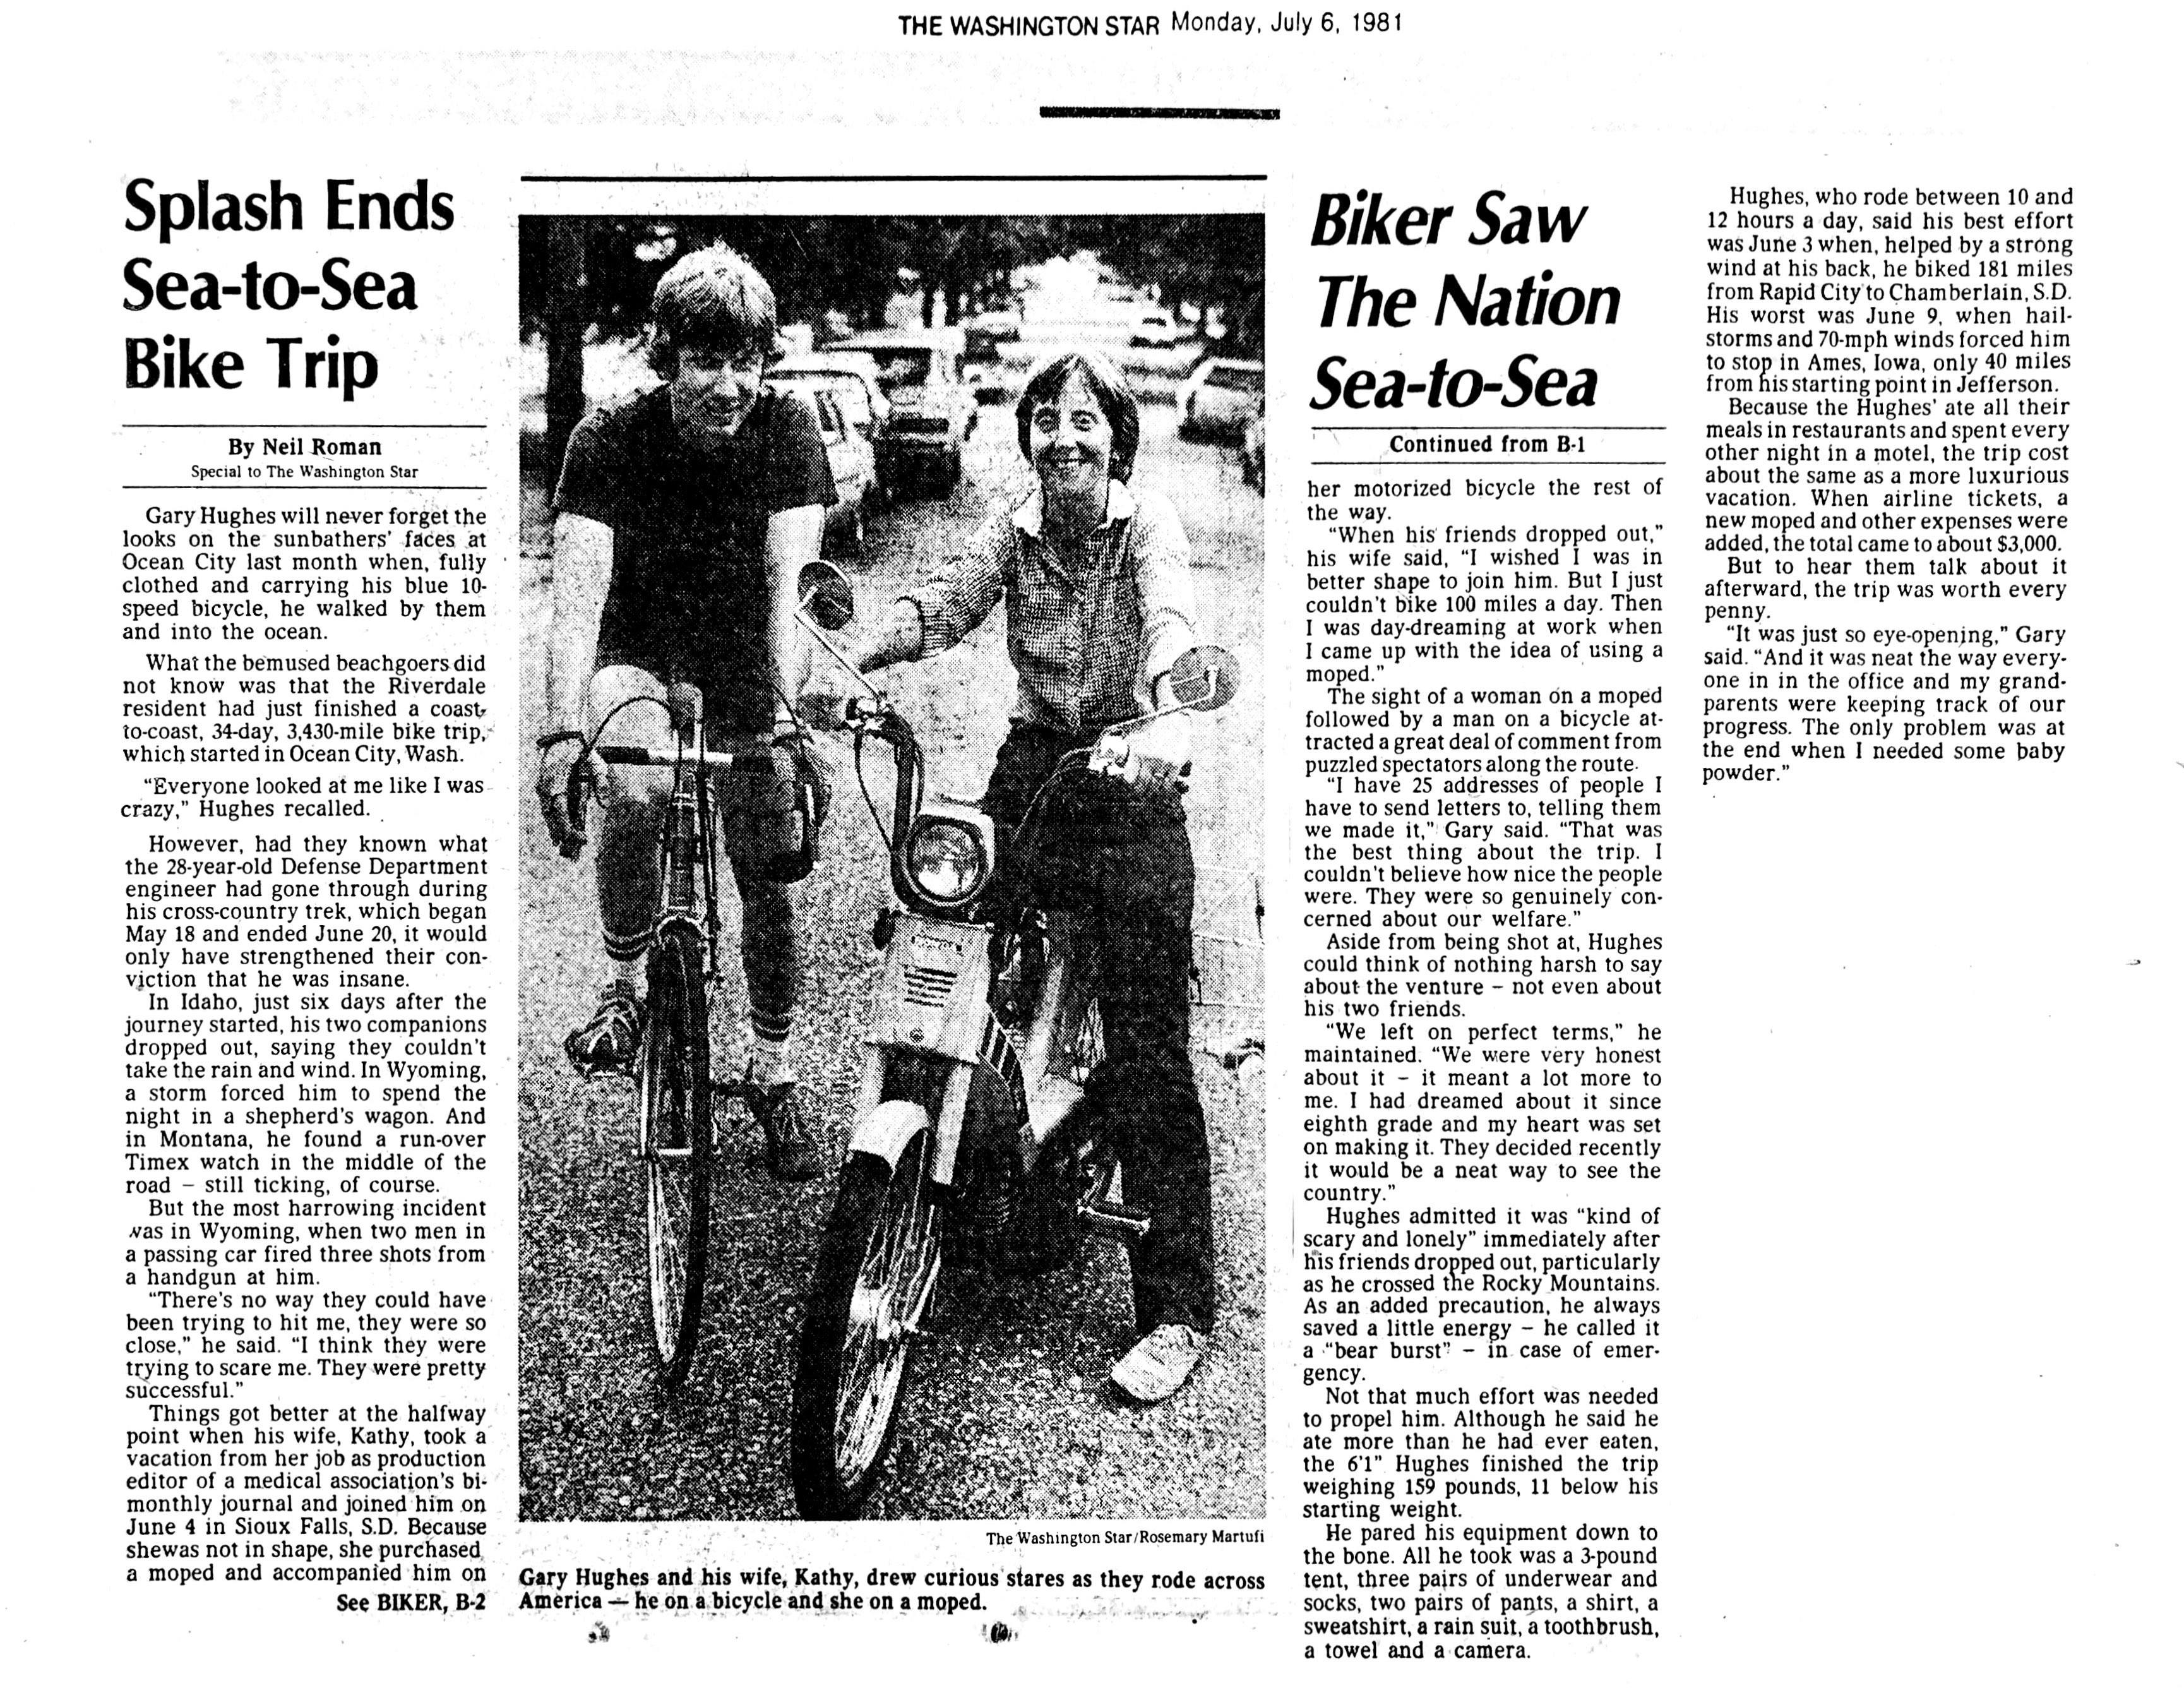 Washington Star 1981 Article